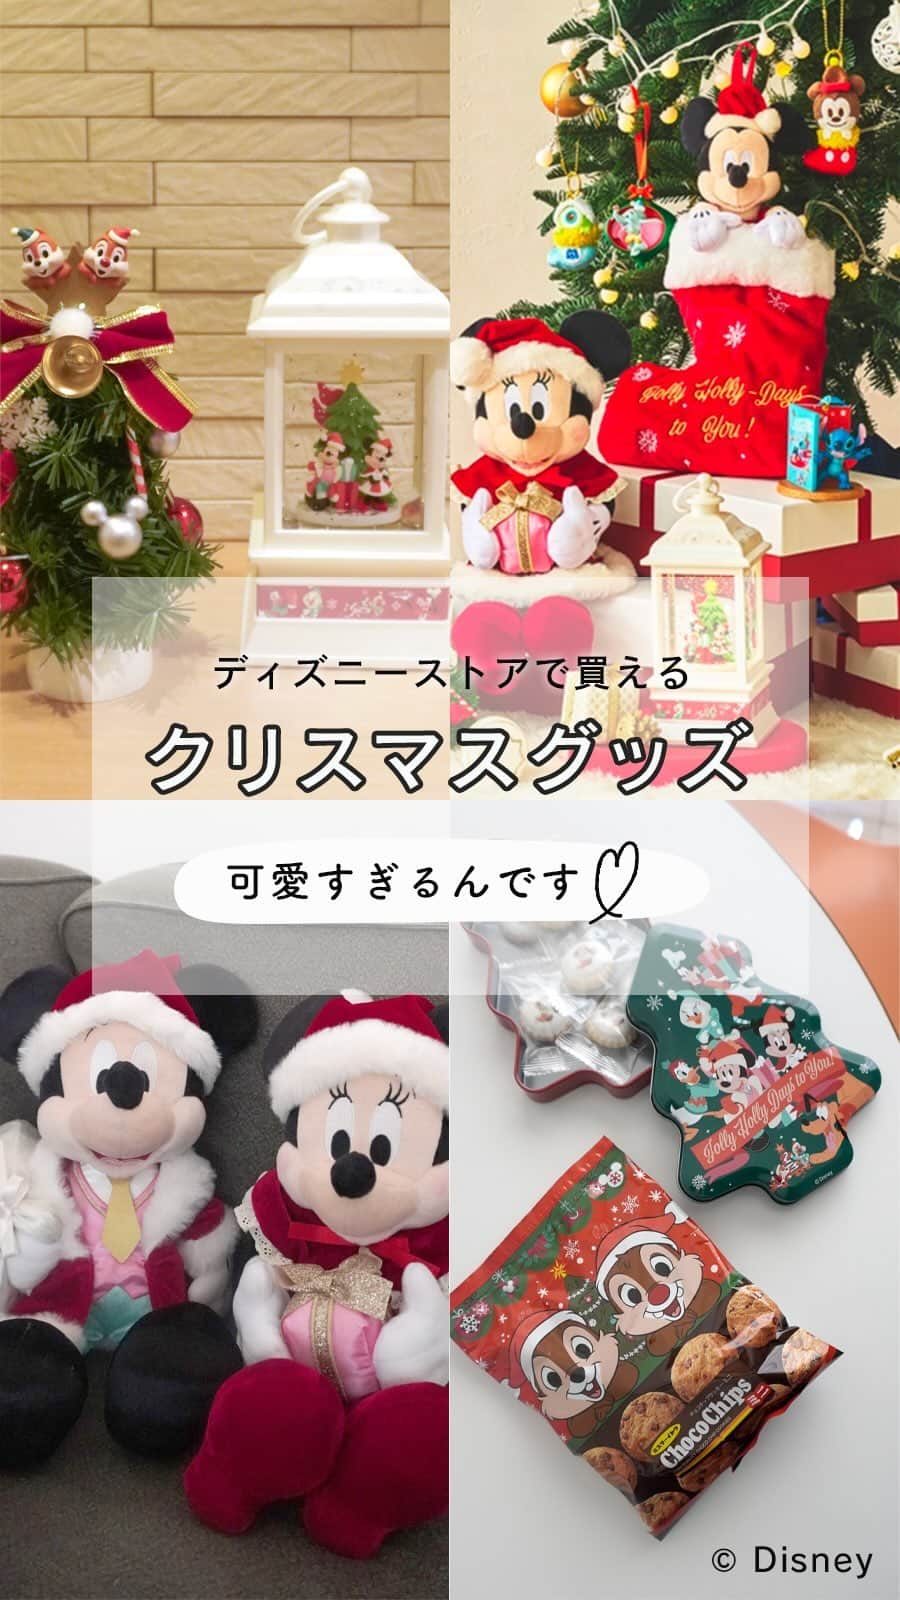 Locariのインスタグラム：「ディズニーストアのクリスマスグッズ もうチェックした？🎅💚  今年はどれも可愛すぎて迷っちゃう！  お部屋に置くだけで クリスマス気分が盛り上がる アイテムからギフトまで ラインナップはたくさん✨🎄  完売も続出なので はやめにチェックしてね！  📝 購入は下記でチェック✨ ディズニーフラッグシップ東京、全国のディズニーストア店舗、ディズニー公式オンラインストア ディズニーストア.jp で発売中です🤍  ※表示価格は税込みです。 ※品切れの際にはご了承ください。 ※商品のデザイン、価格、販売店舗、仕様は変更になる場合がございます。  #PR #ディズニーストア #ディズニーフラッグシップ東京 #ディズニー #Disney #Christmas #クリスマスグッズ #クリスマスプレゼント #クリスマスツリー #ディズニークリスマス#ディズニー好き #merrychristmas #xmas #xmastree」